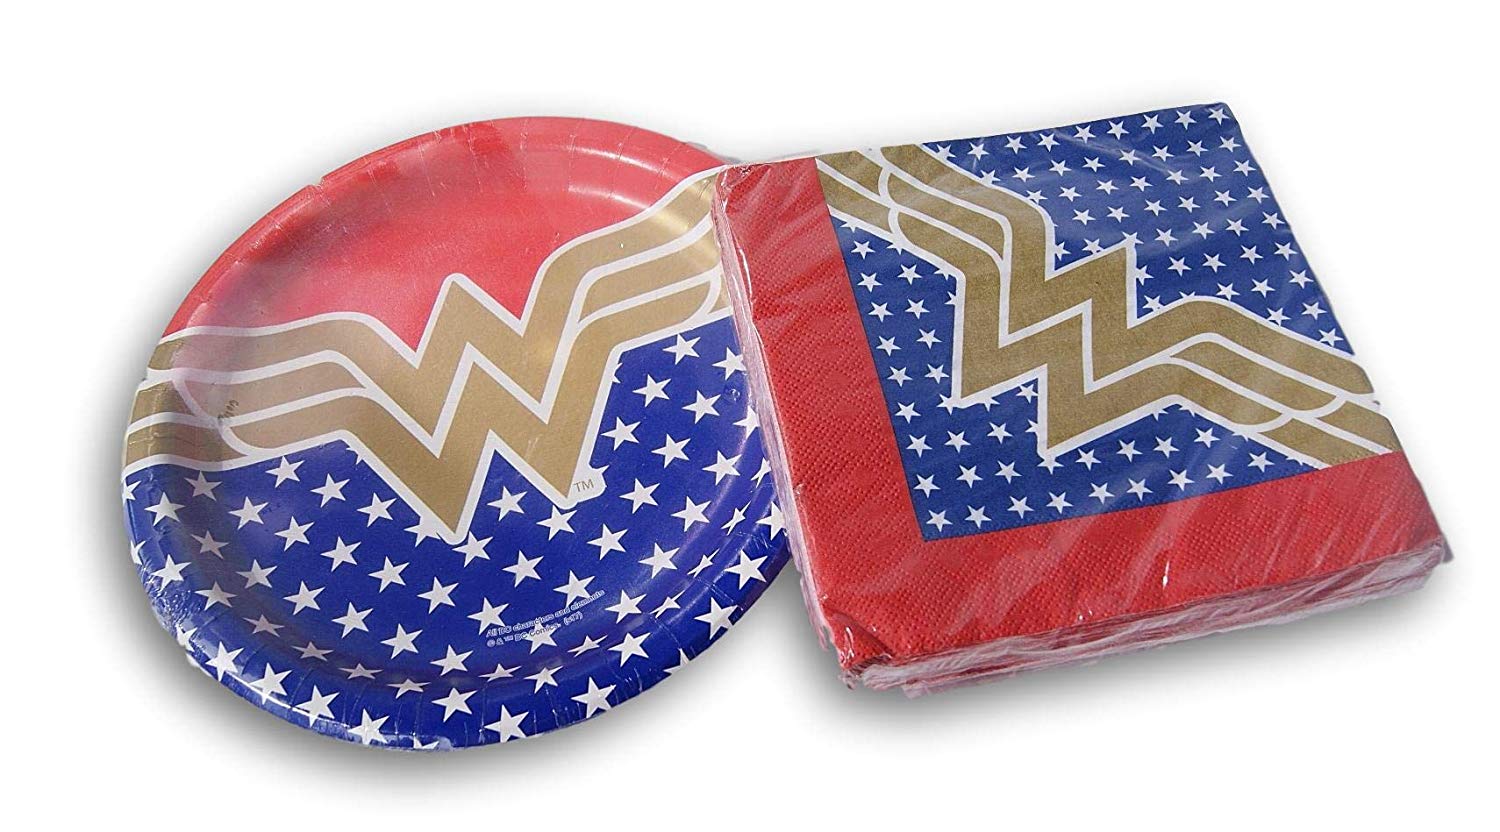 Wonder Woman plates and napkins